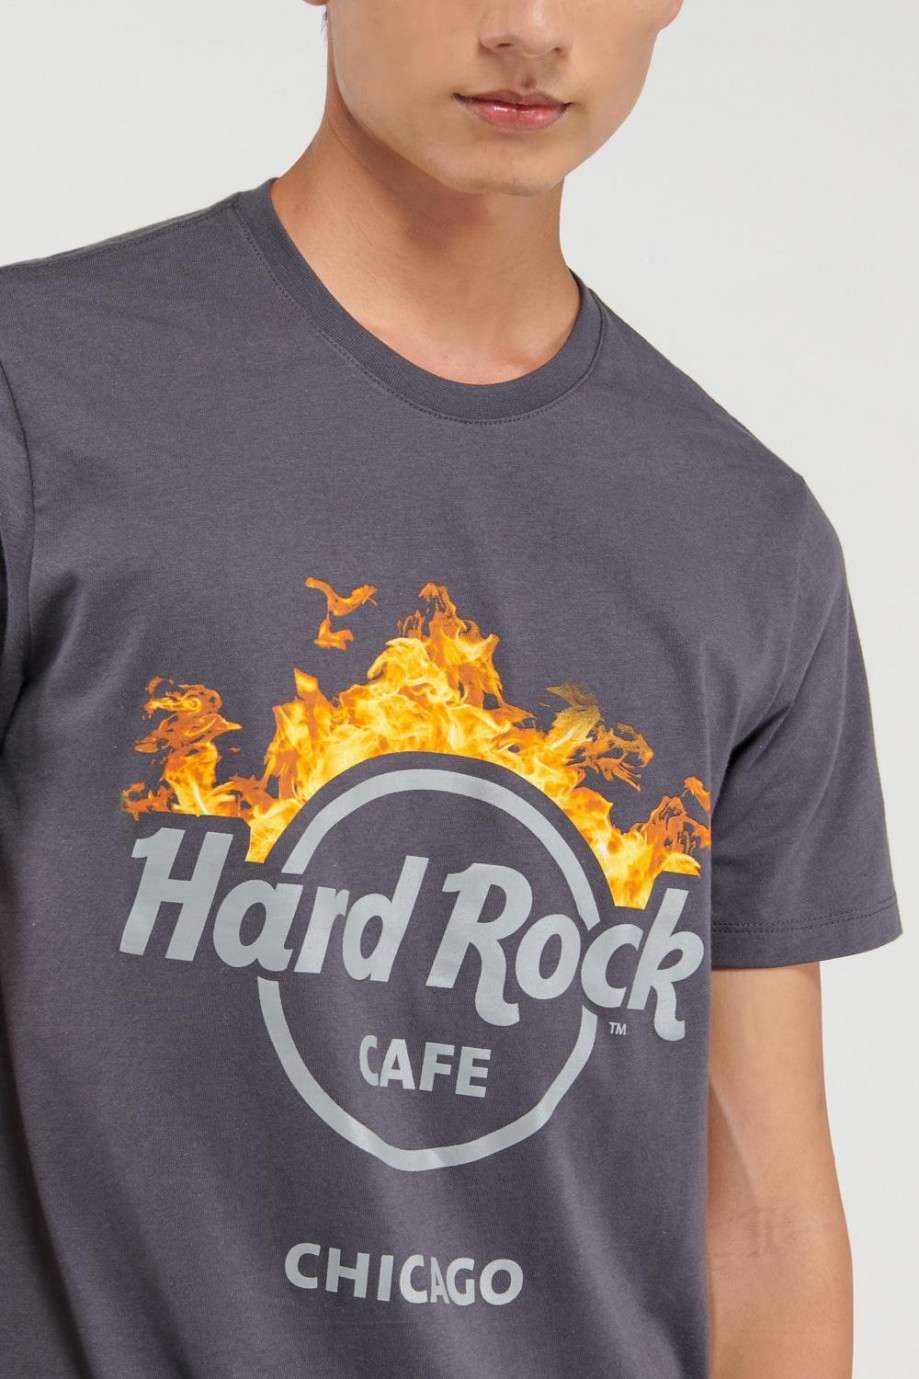 Camiseta manga corta, estampado de Hard Rock Café